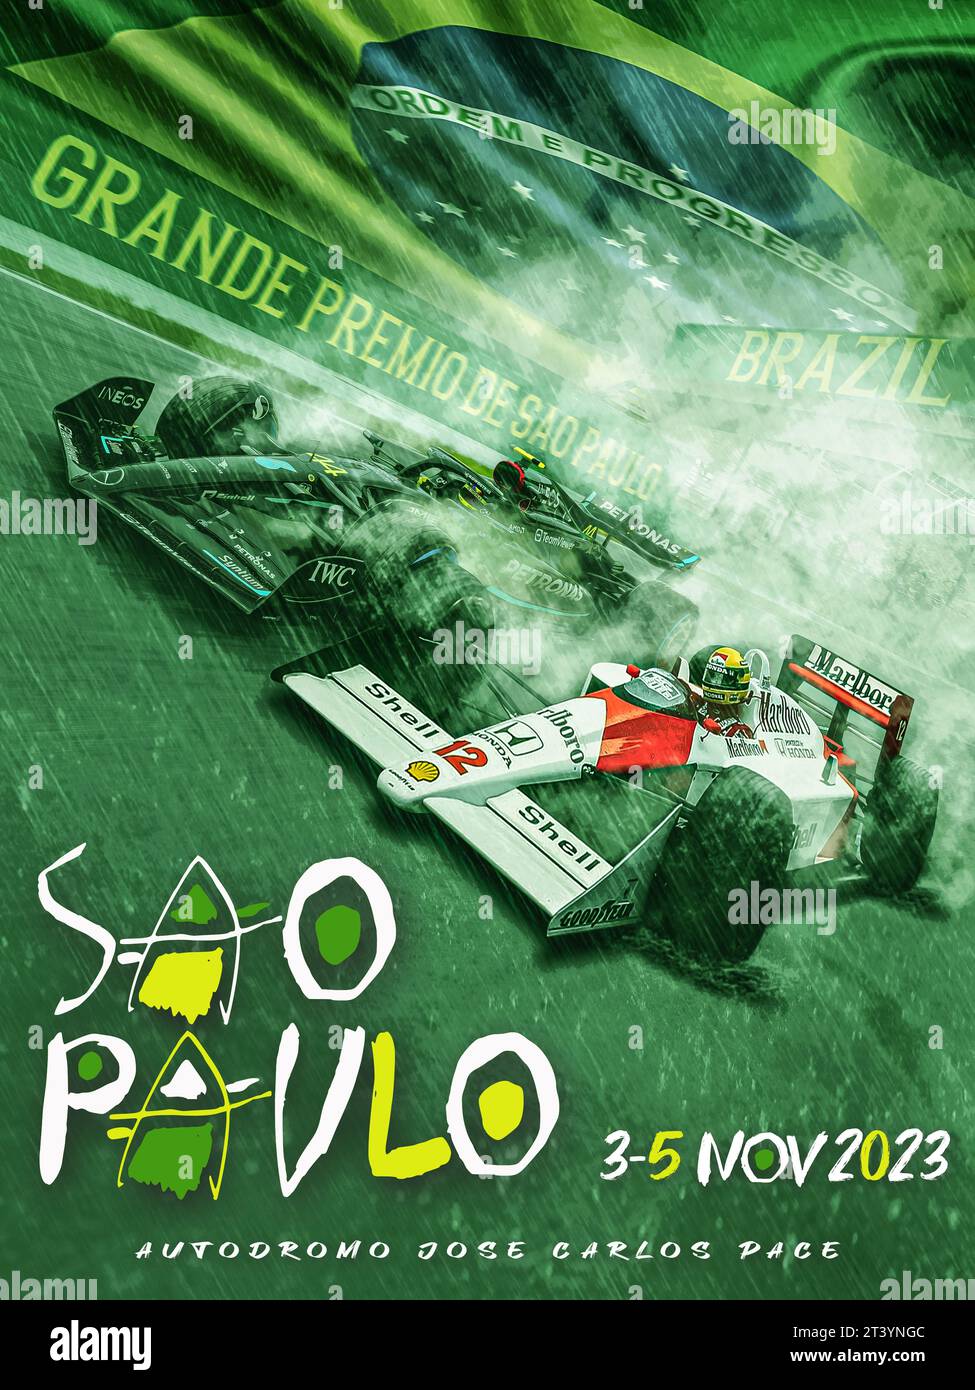 Brazilian F1 Grand Prix 2023 Race Poster Stock Photo